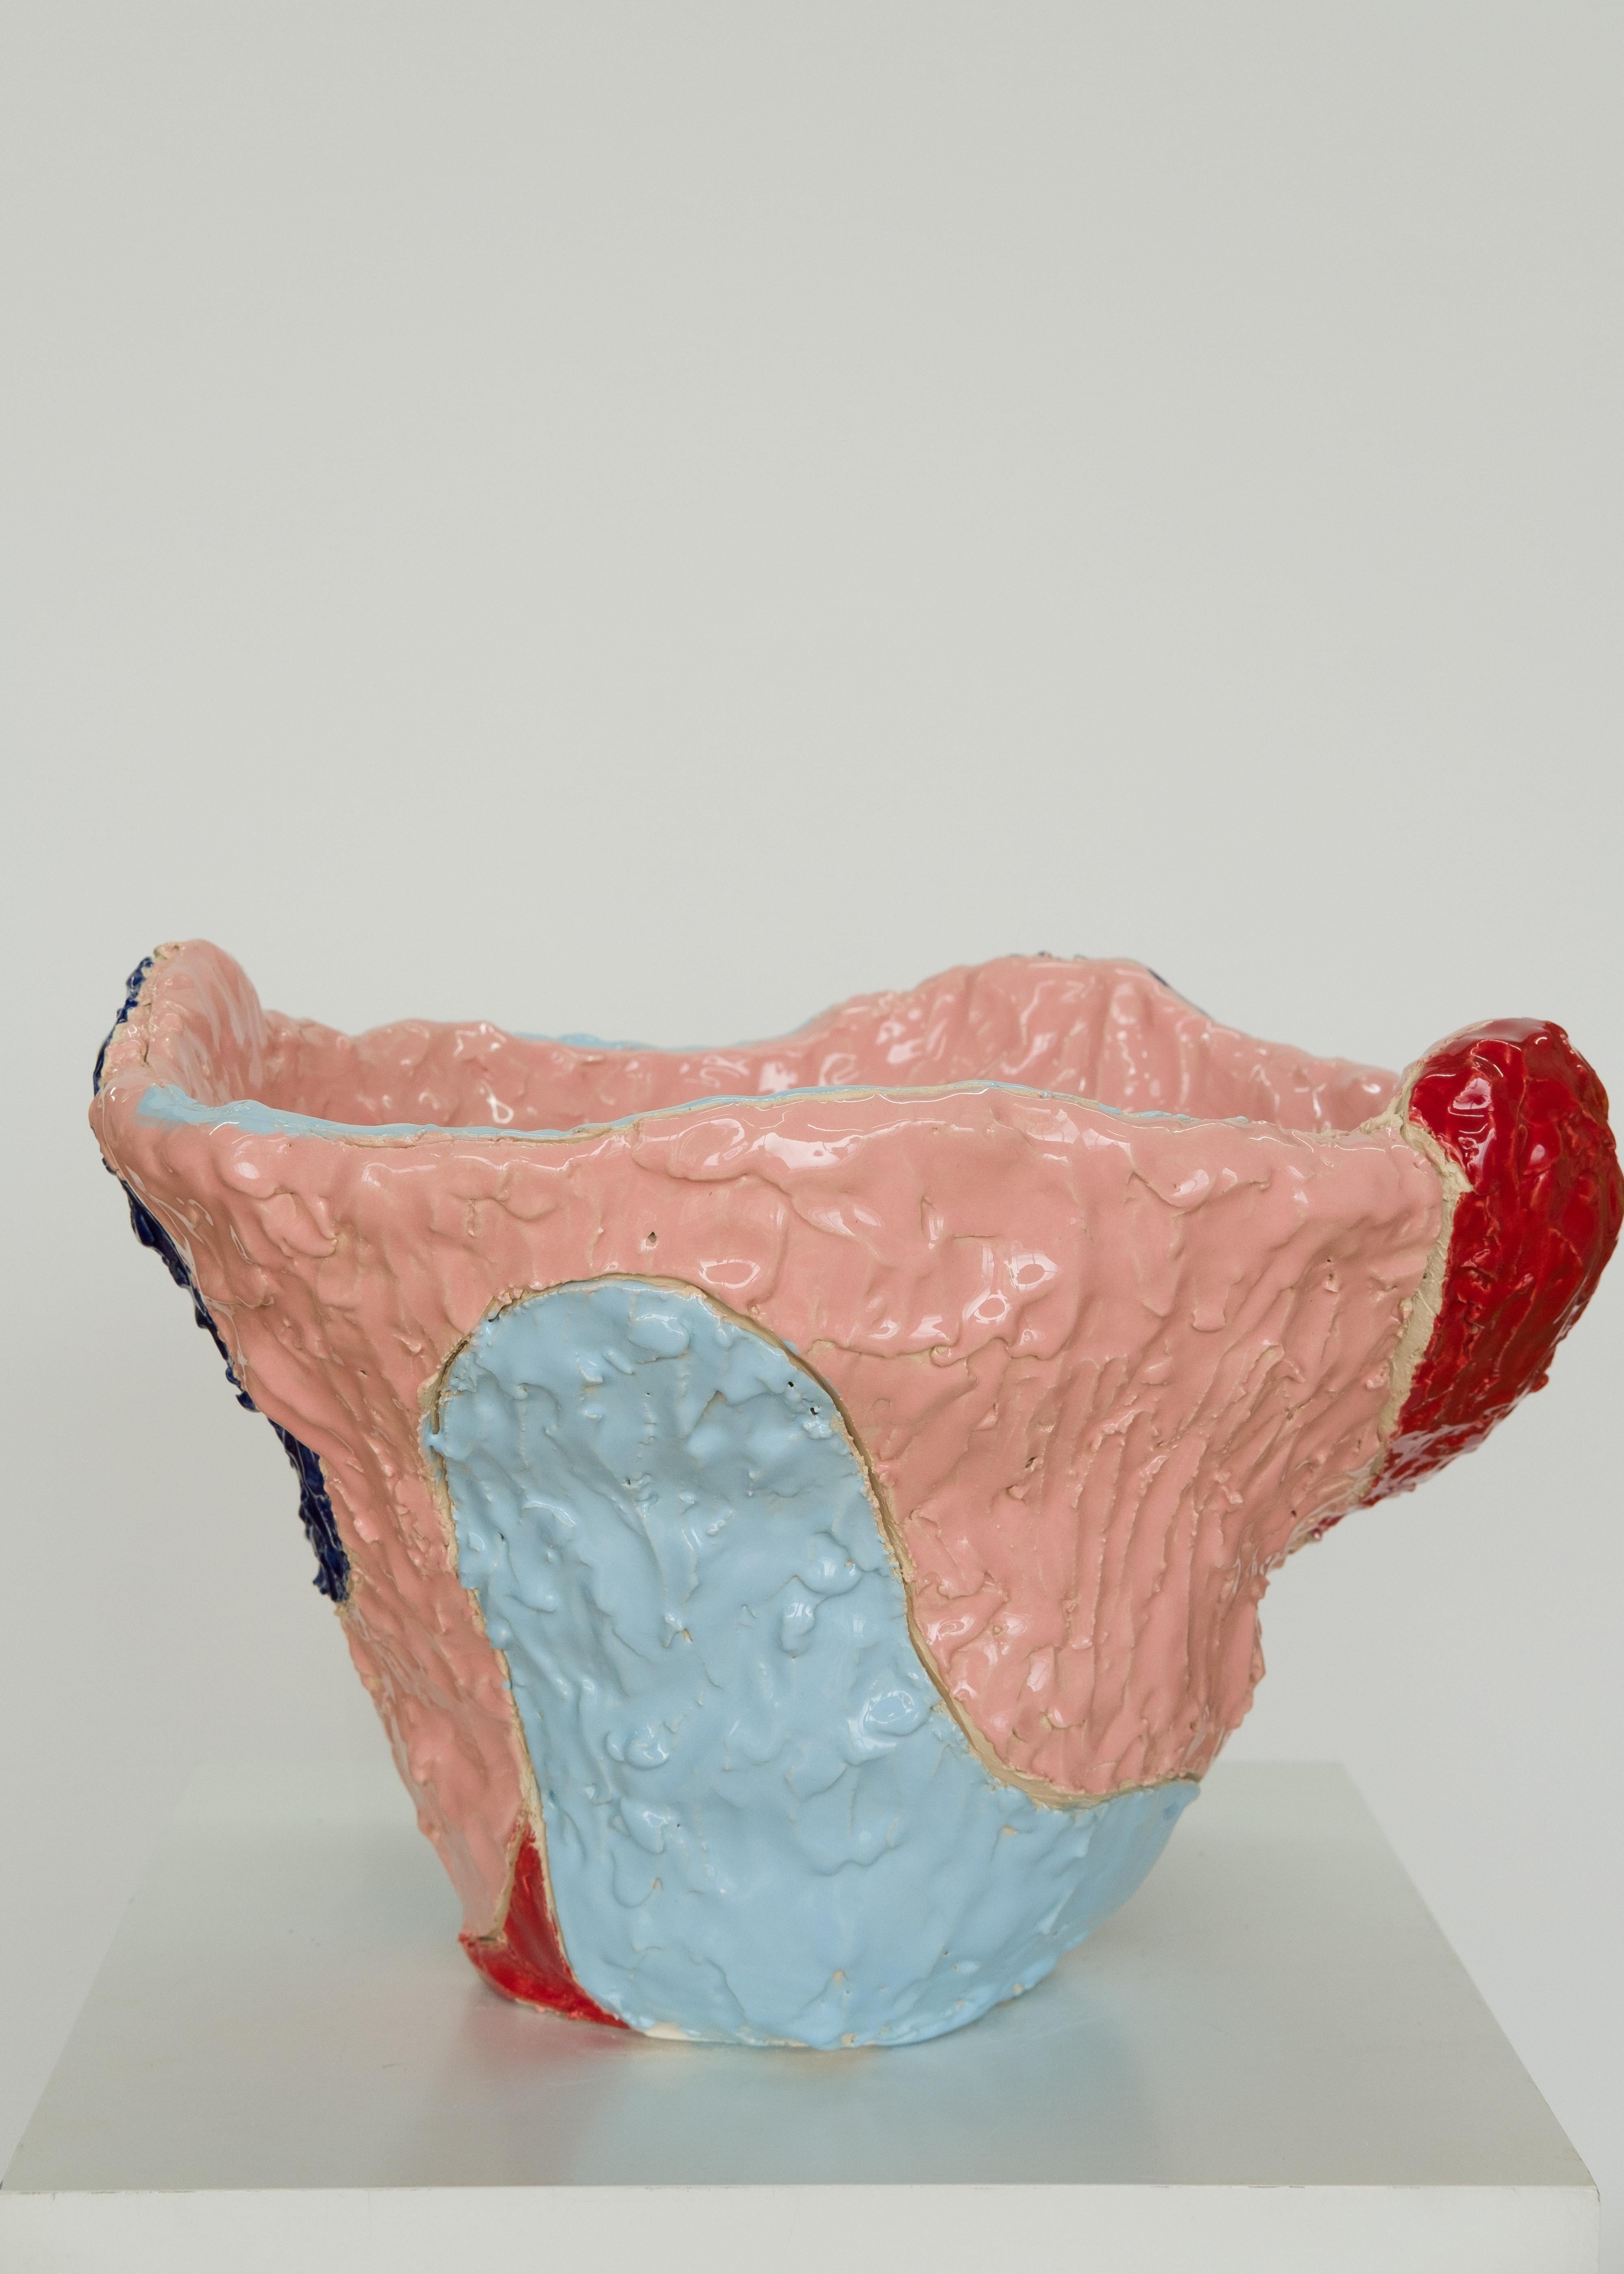 Marliz Frencken, ceramic vase (sculpture, object, abstract, interior) For Sale 3